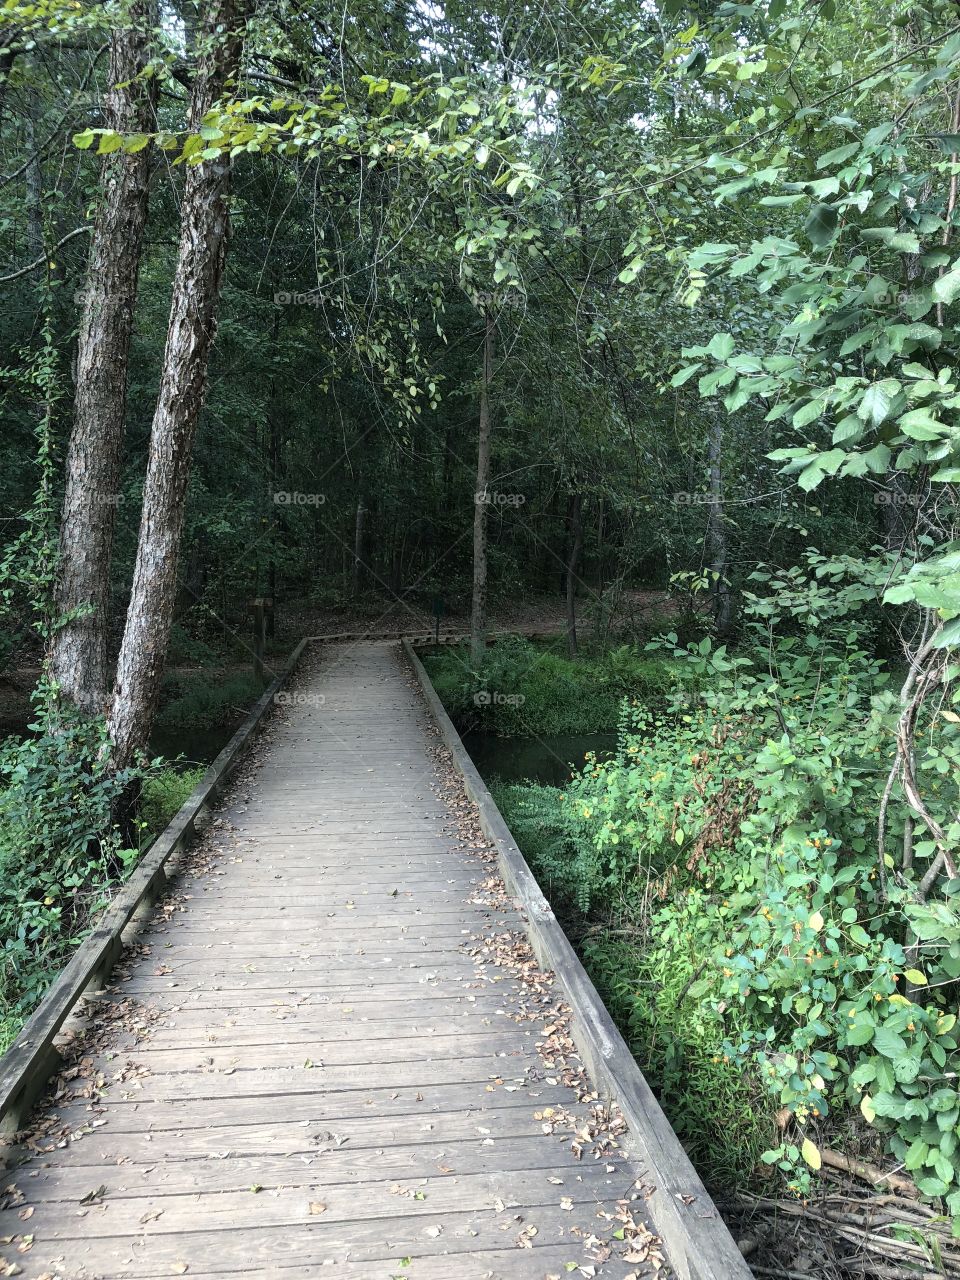 Boardwalk through a swampy forest nature park.